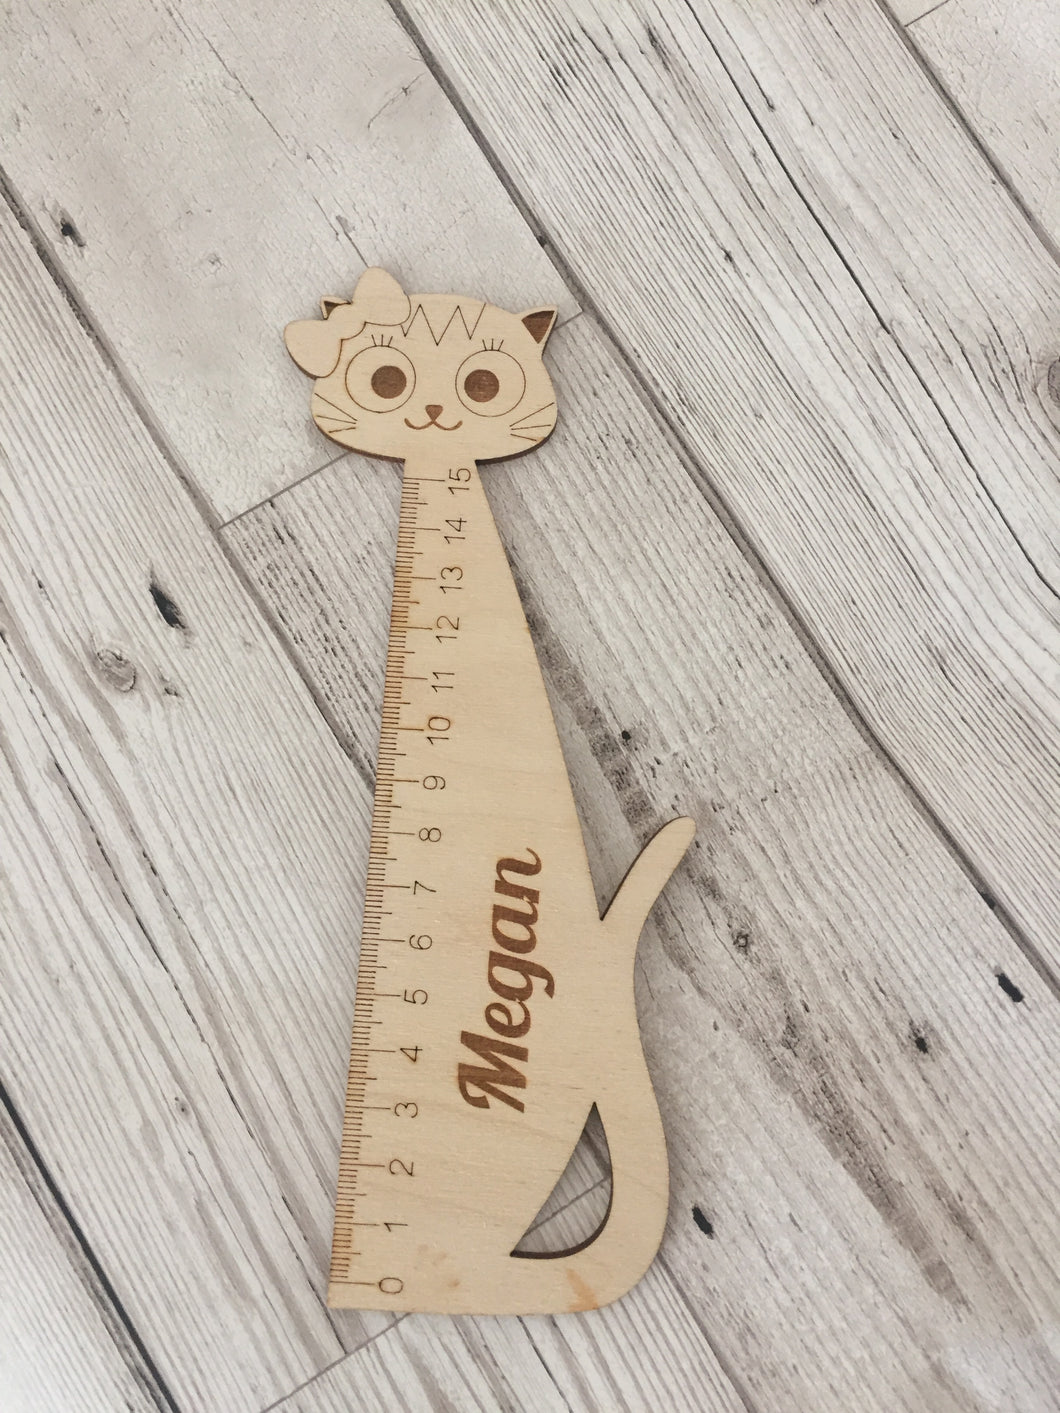 Personalised wooden ruler cat shape - Laser LLama Designs Ltd